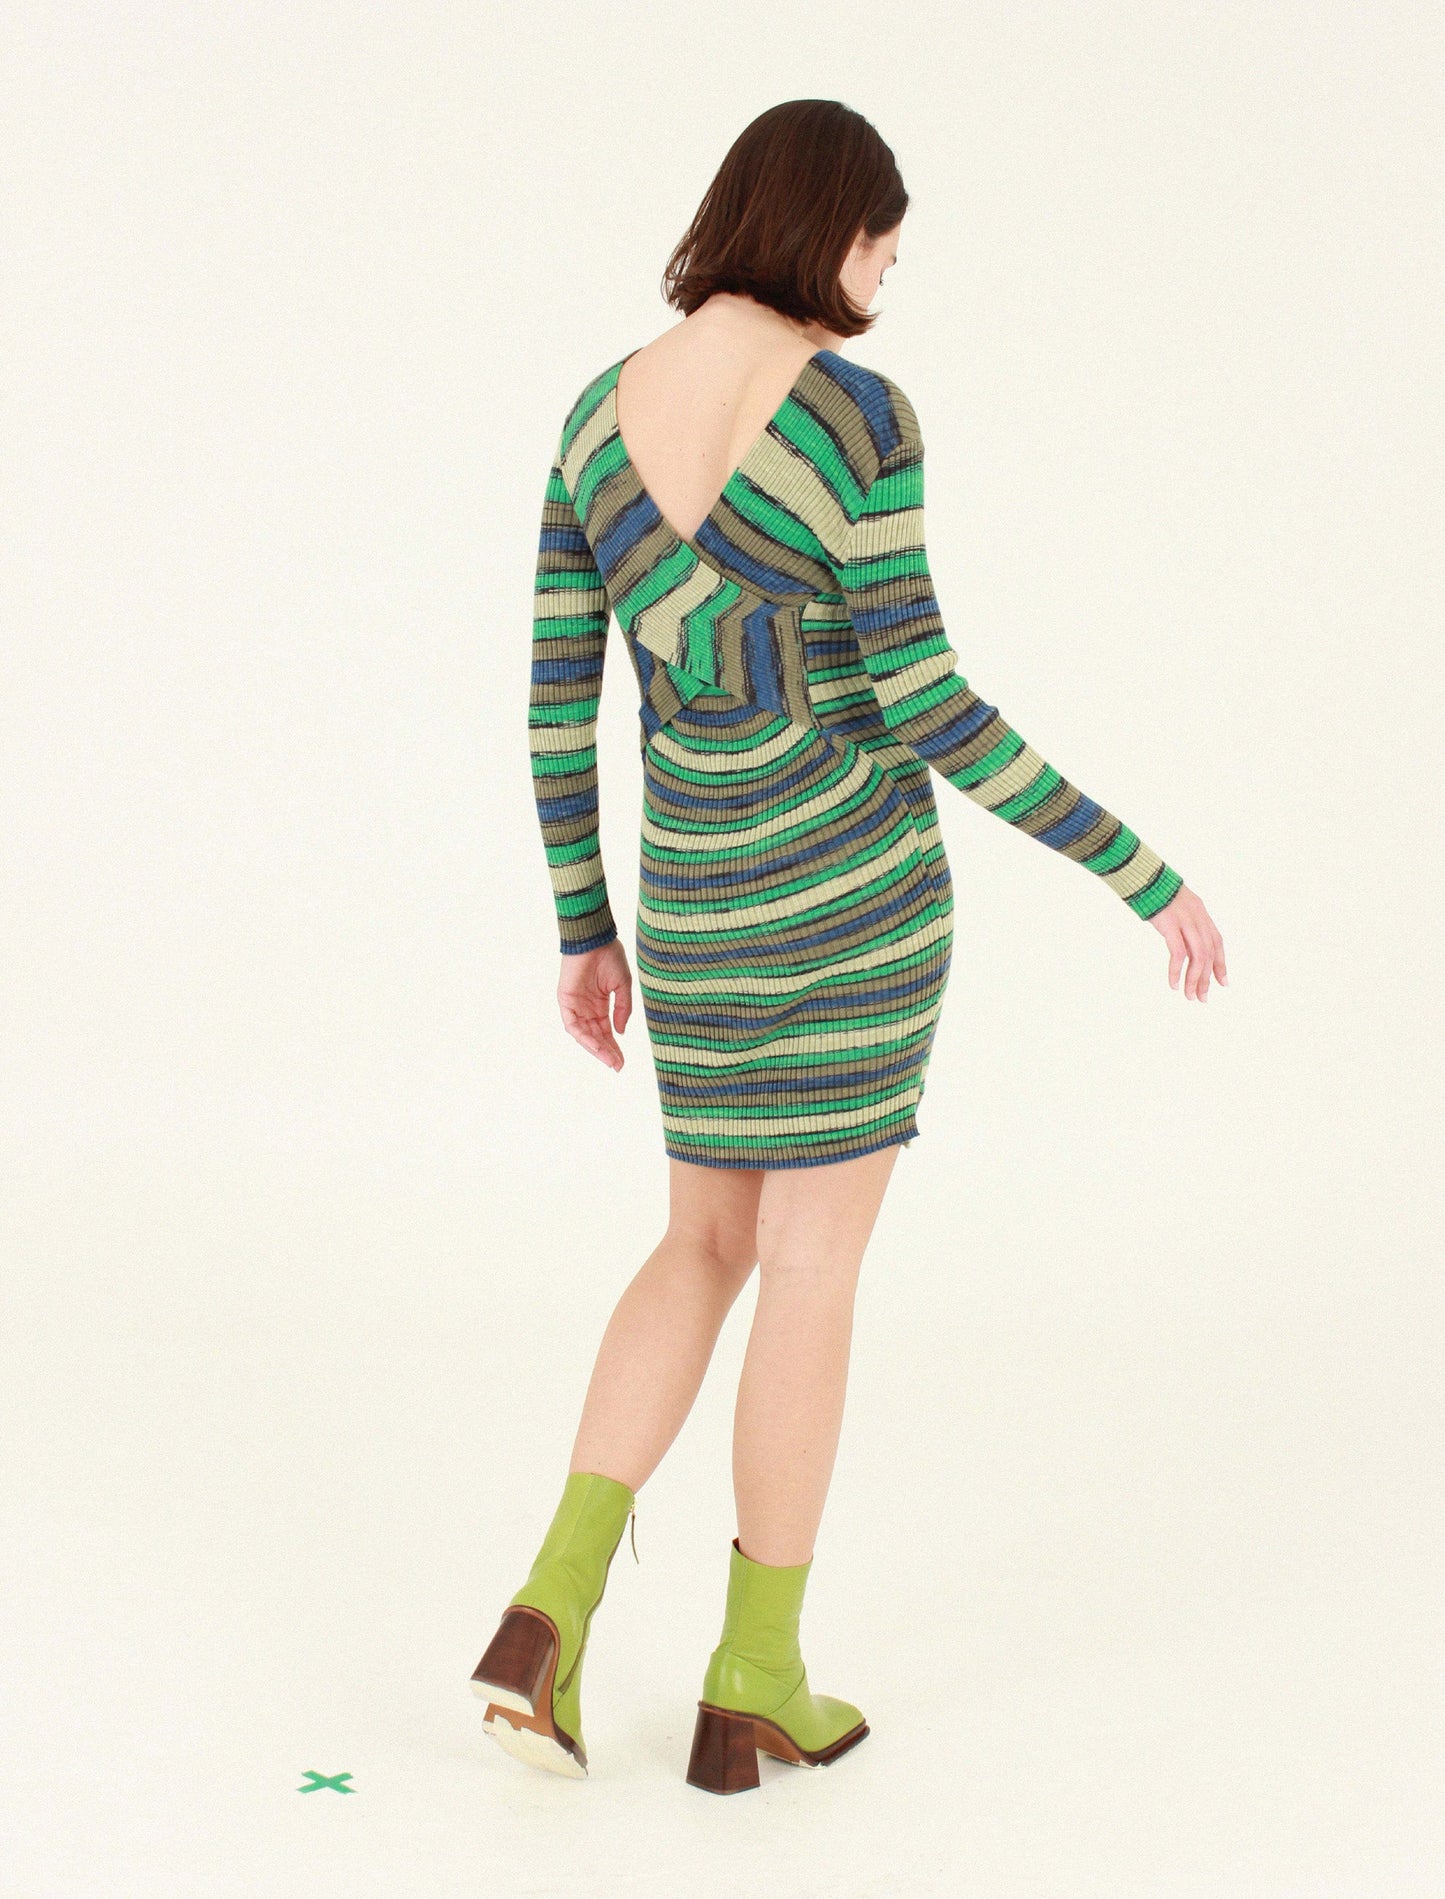 STUDIO FANTASTIQUE Brisa Dress in Green available at Lahn.shop